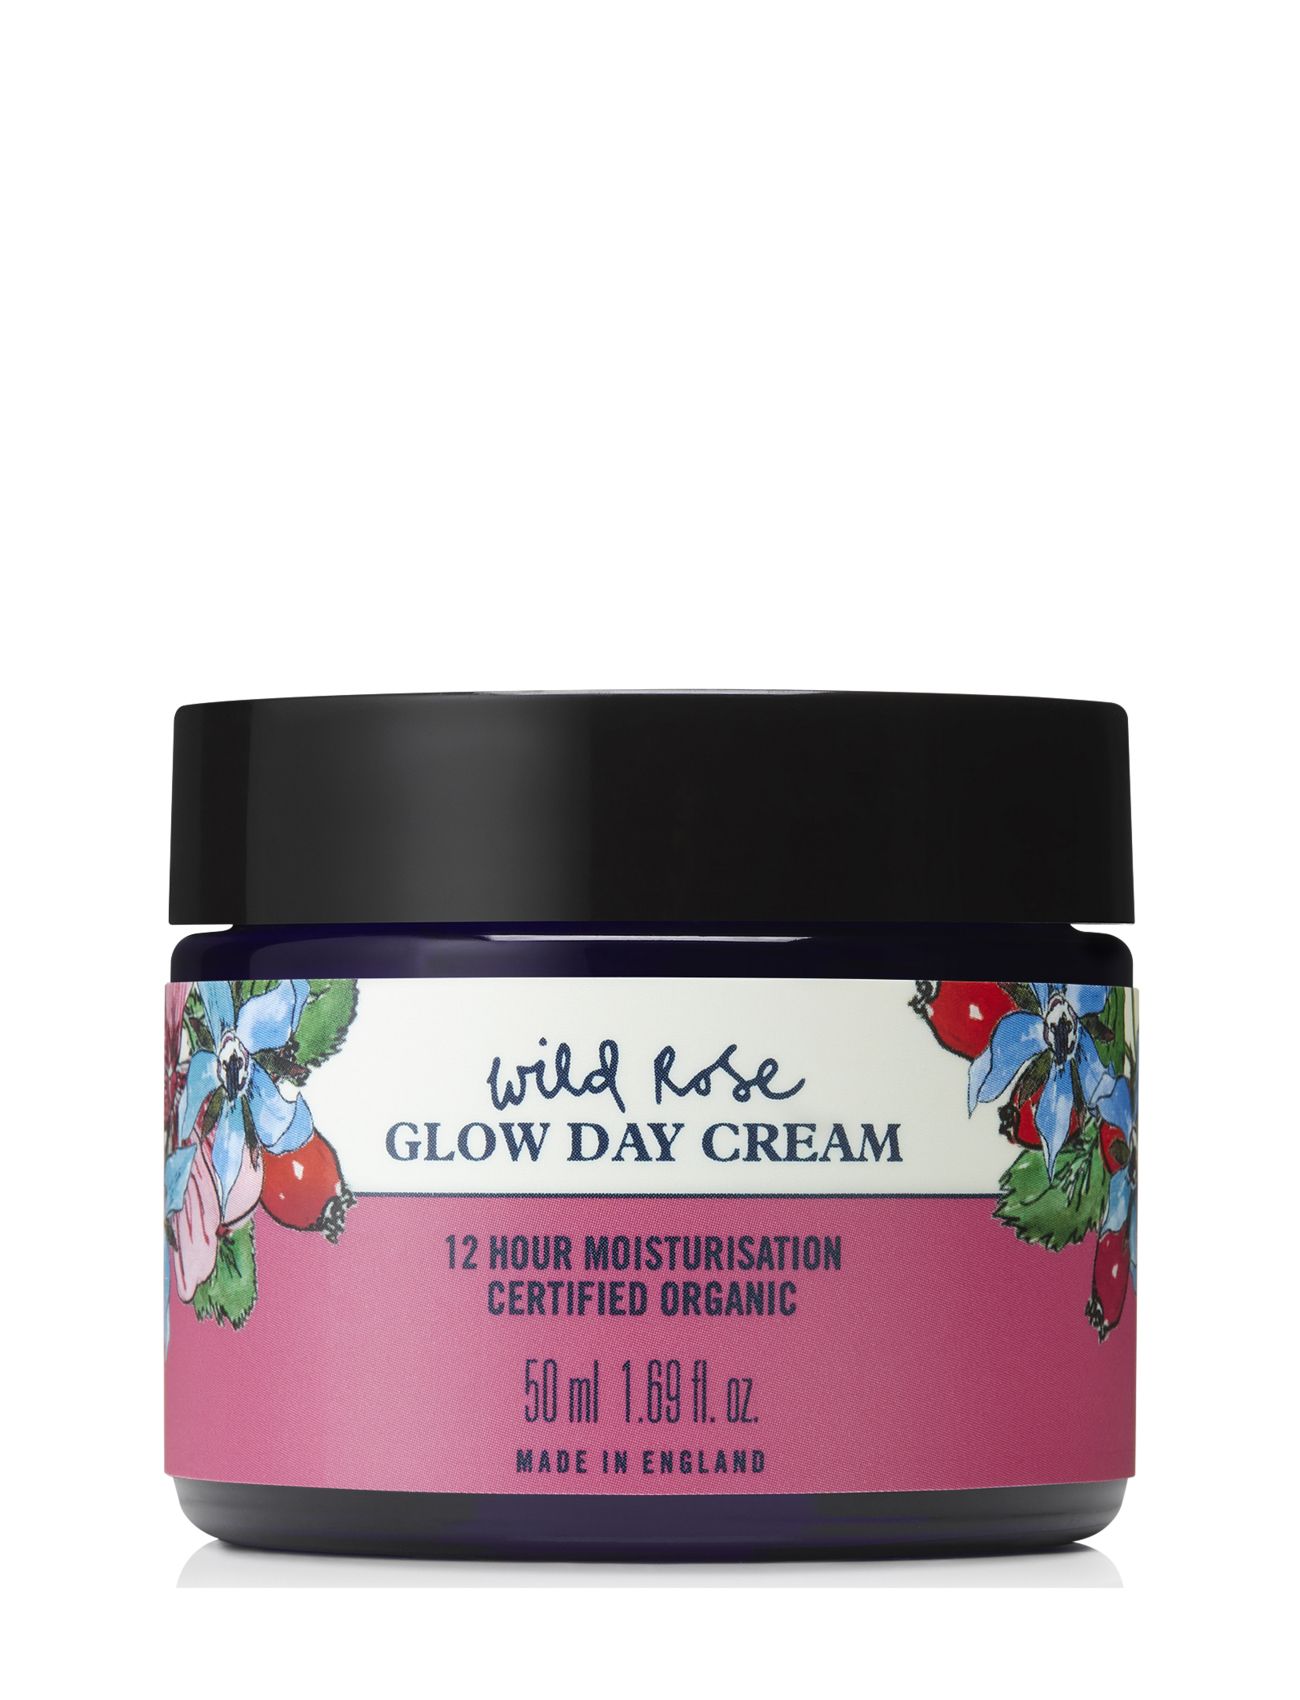 Wild Rose Glow Moisturiser Beauty WOMEN Skin Care Face Day Creams Nude Neal's Yard Remedies